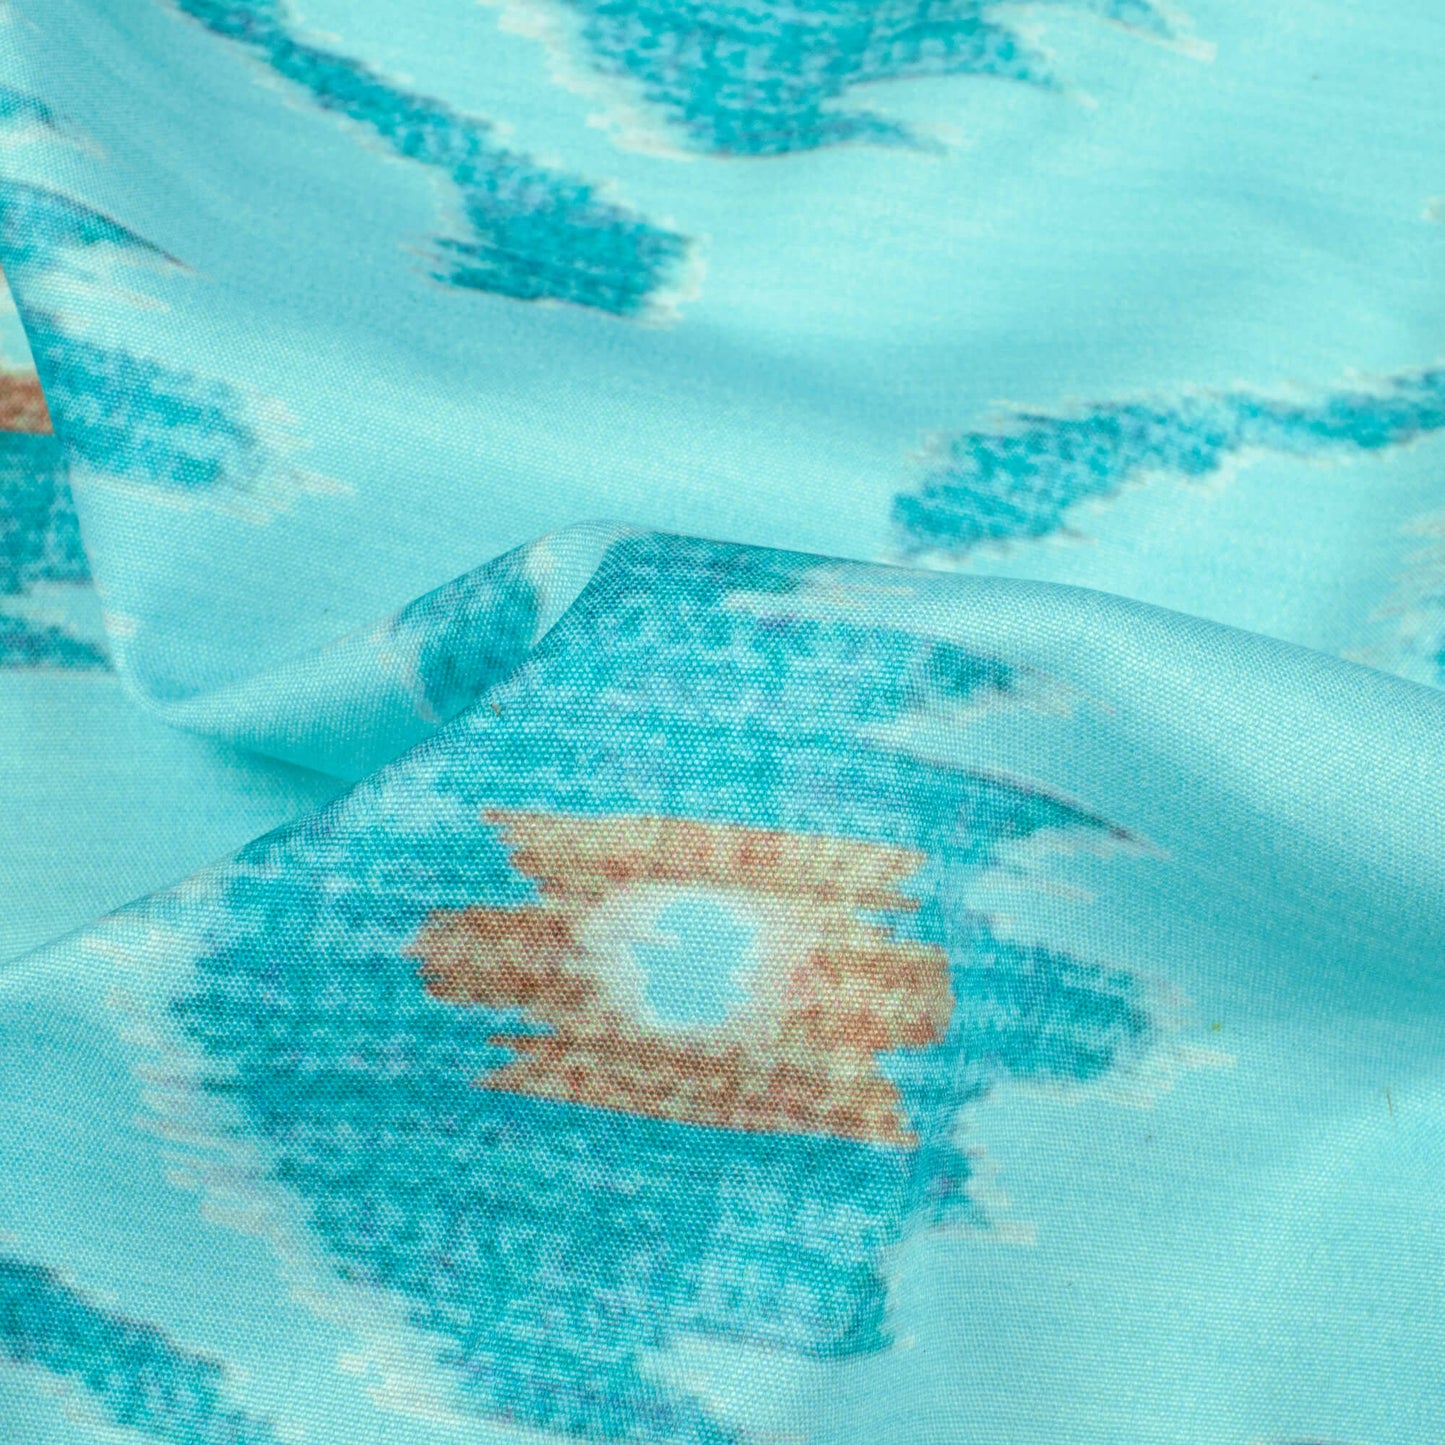 Sky Blue And Sienna Brown Ikat Pattern Digital Print Ultra Premium Butter Crepe Fabric